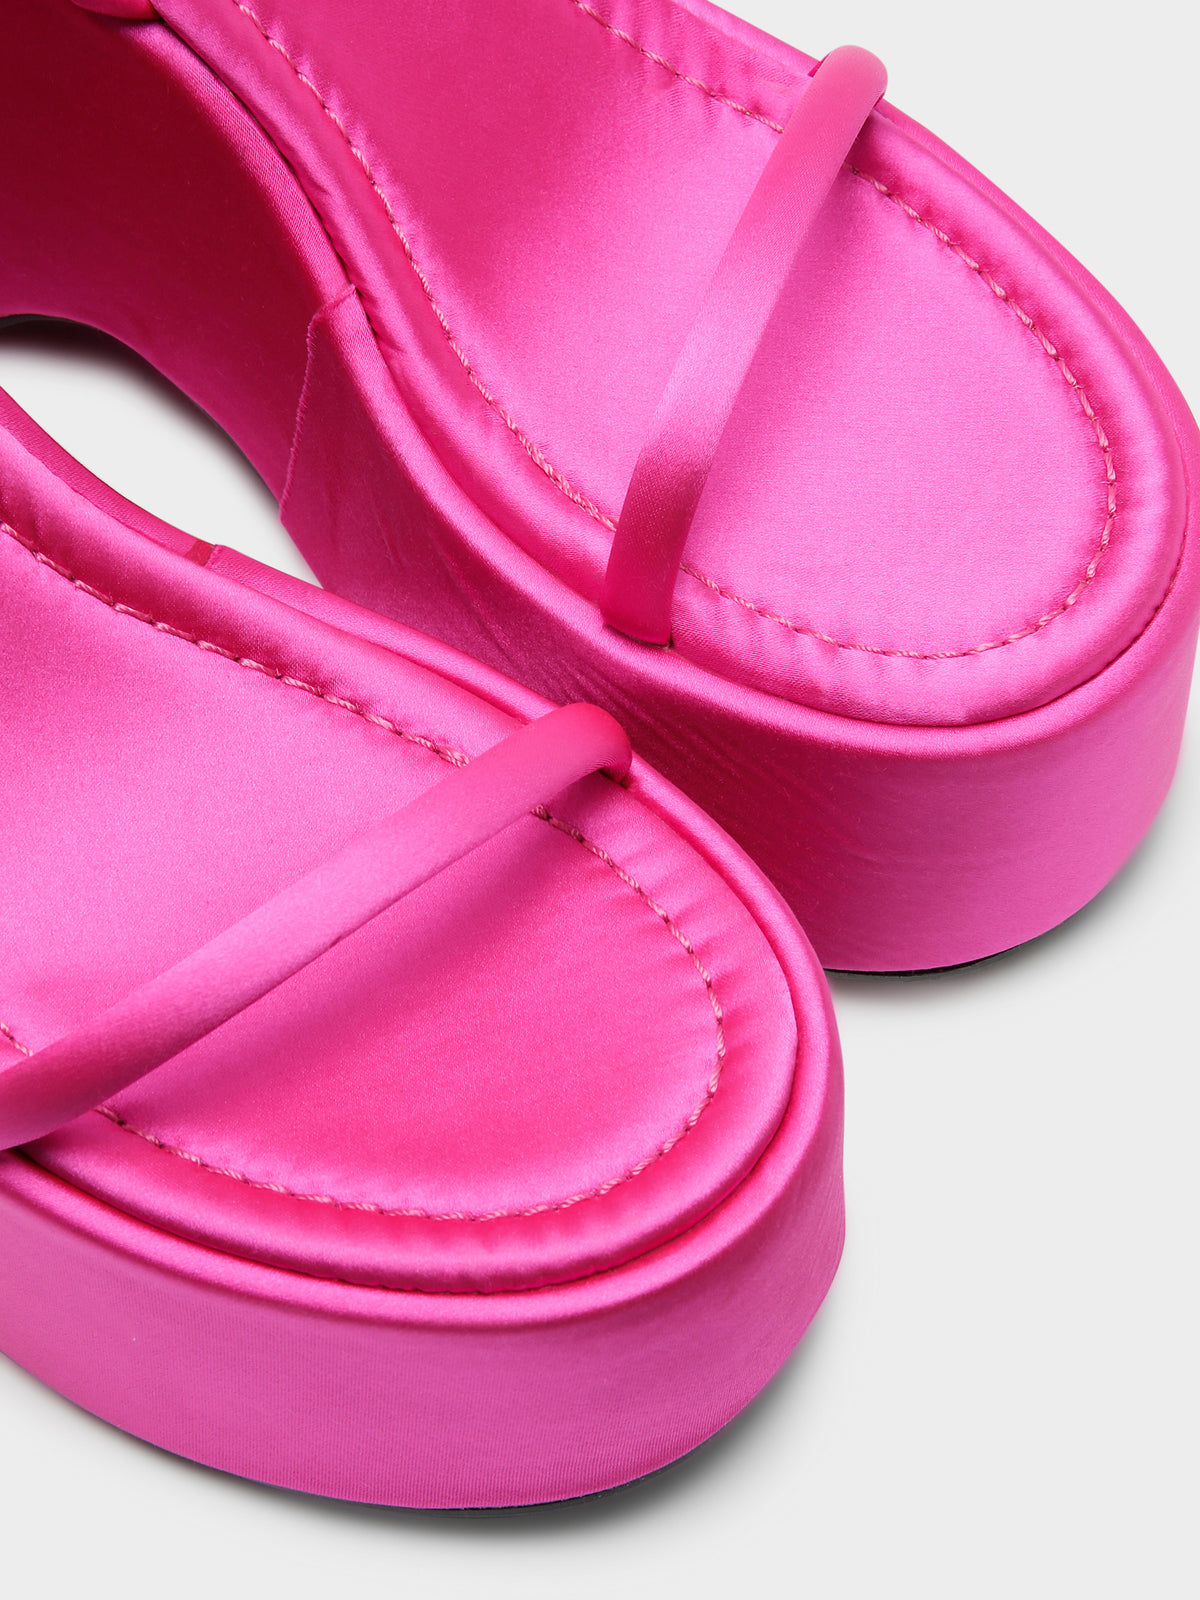 Womens Ella May Ding Elevate Platform Sandal in Pink